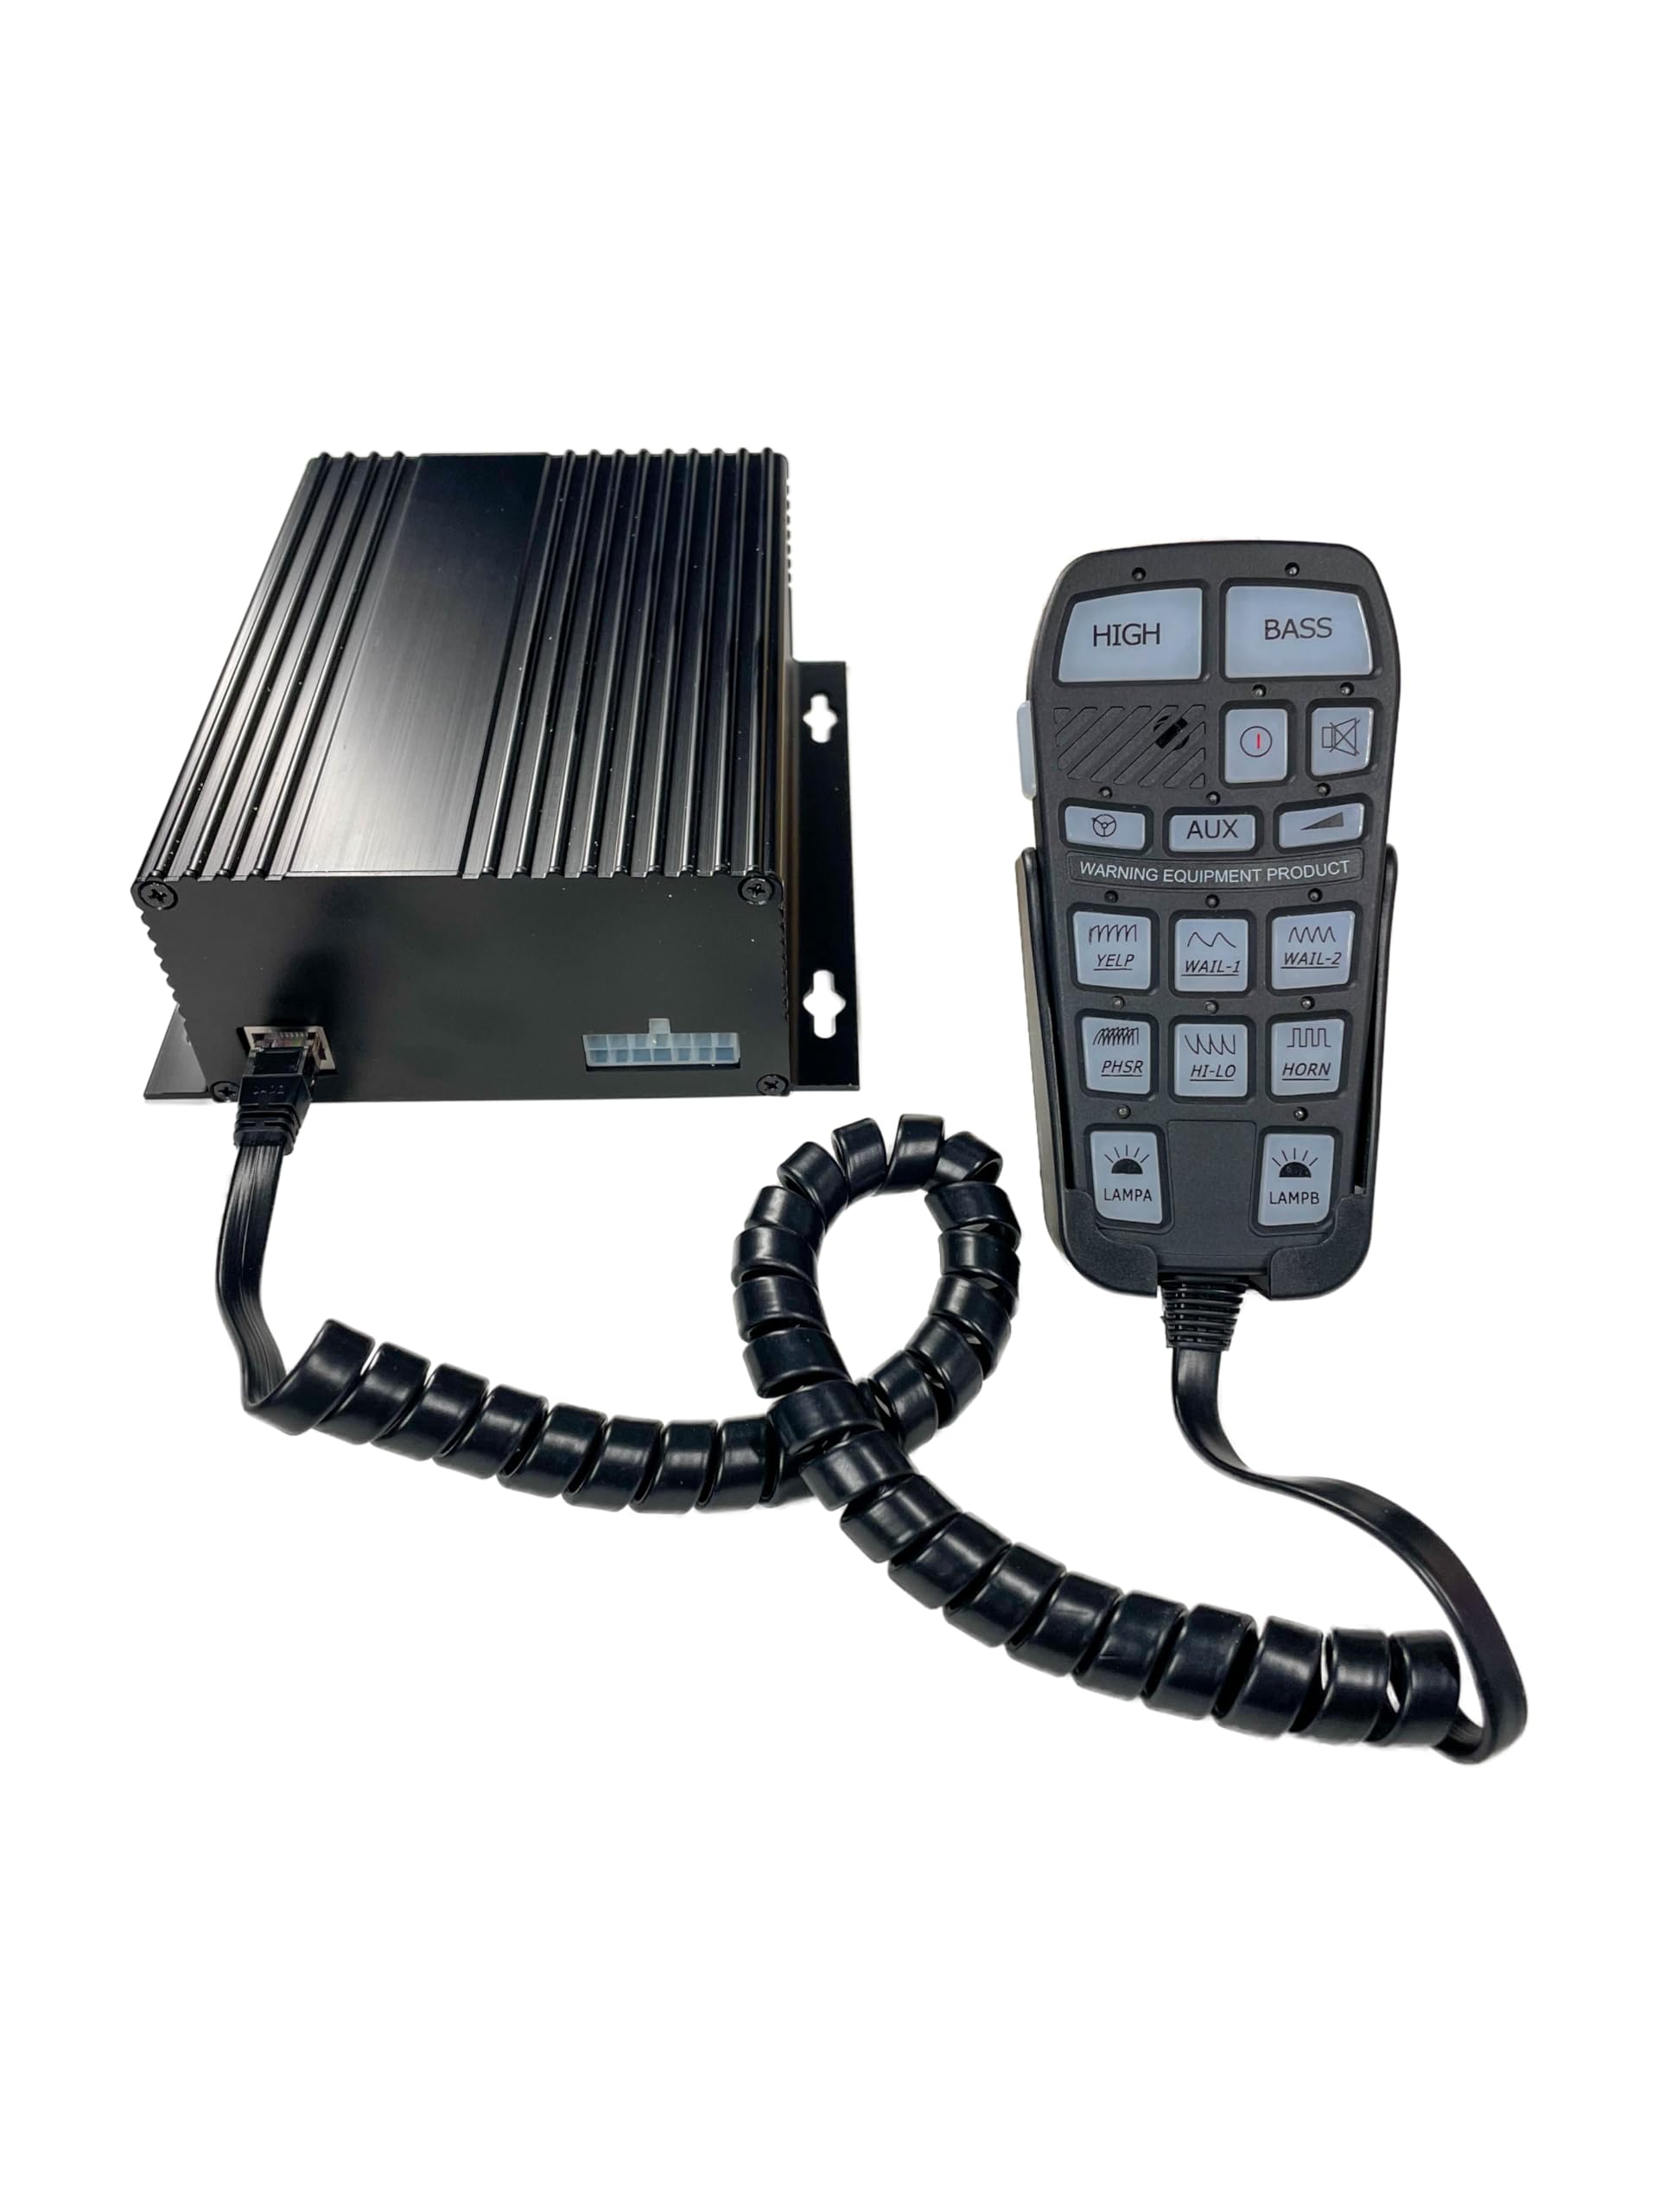 100W Siren & PA System for Trucks Cars SUV Handheld Remote Emergency Warning Volunteer with Popular North American Tones (100 Watt)